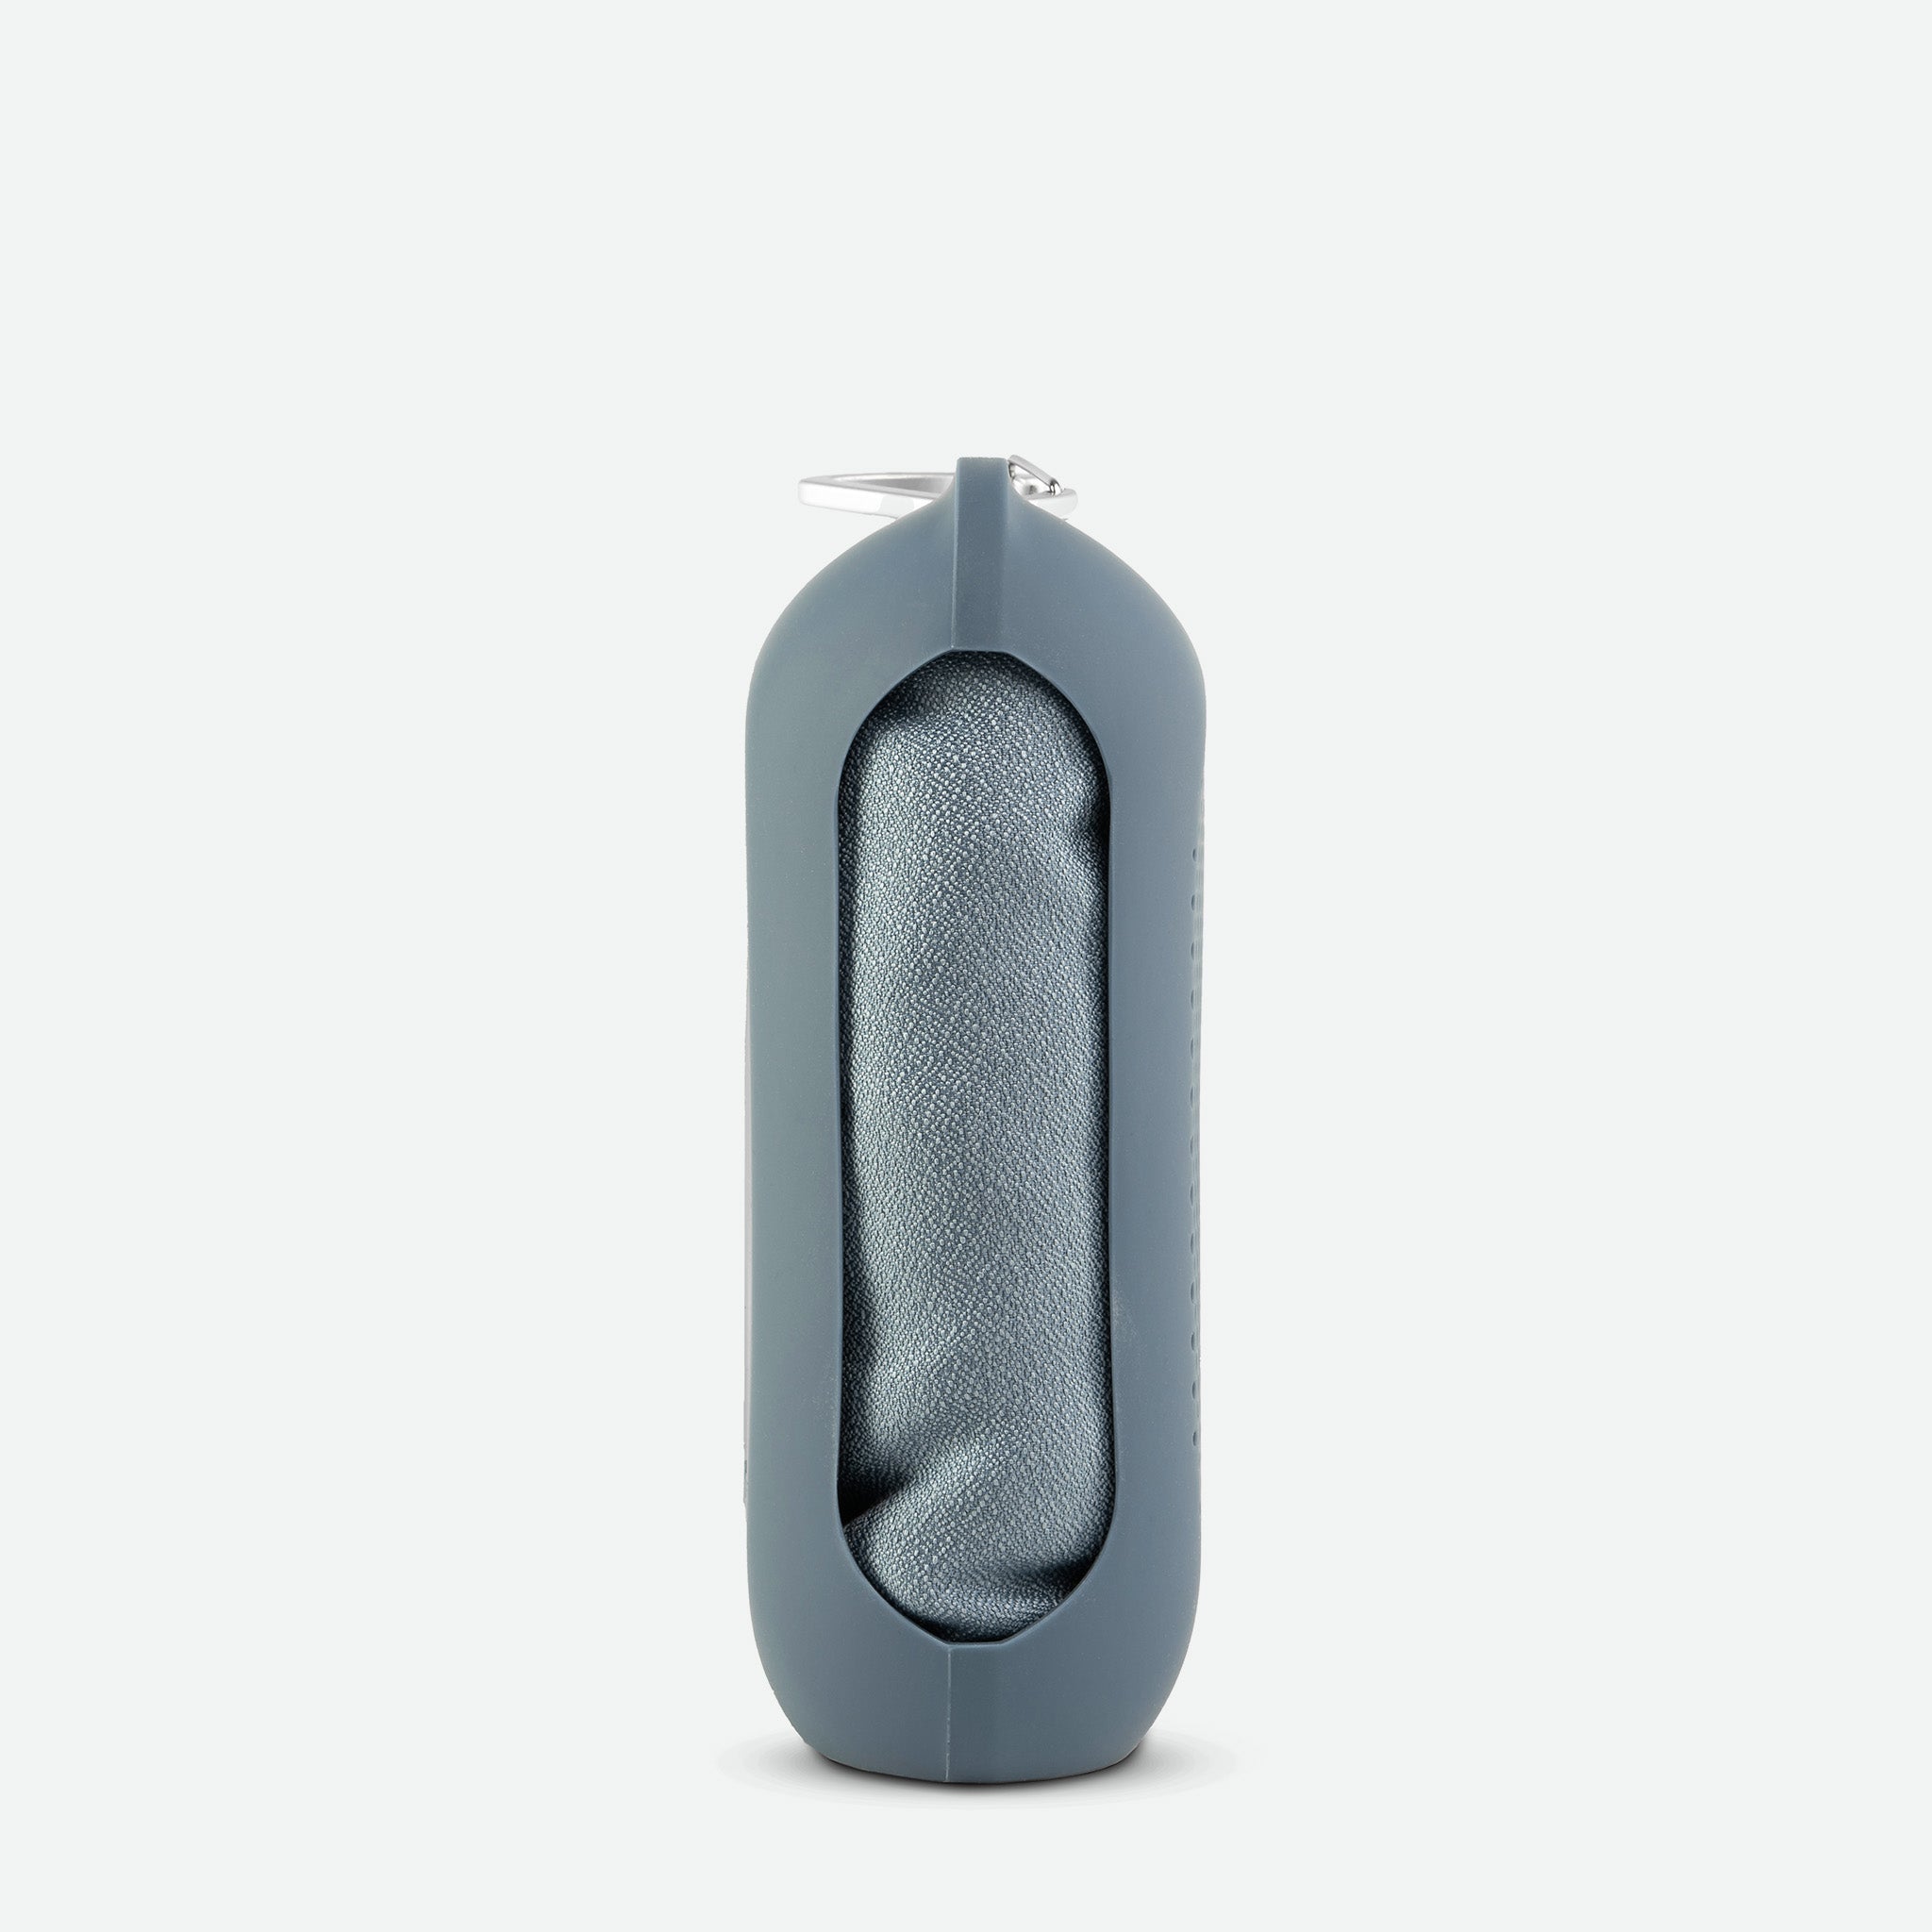 Matador NanoDry Packable Shower Towel Slate Blue